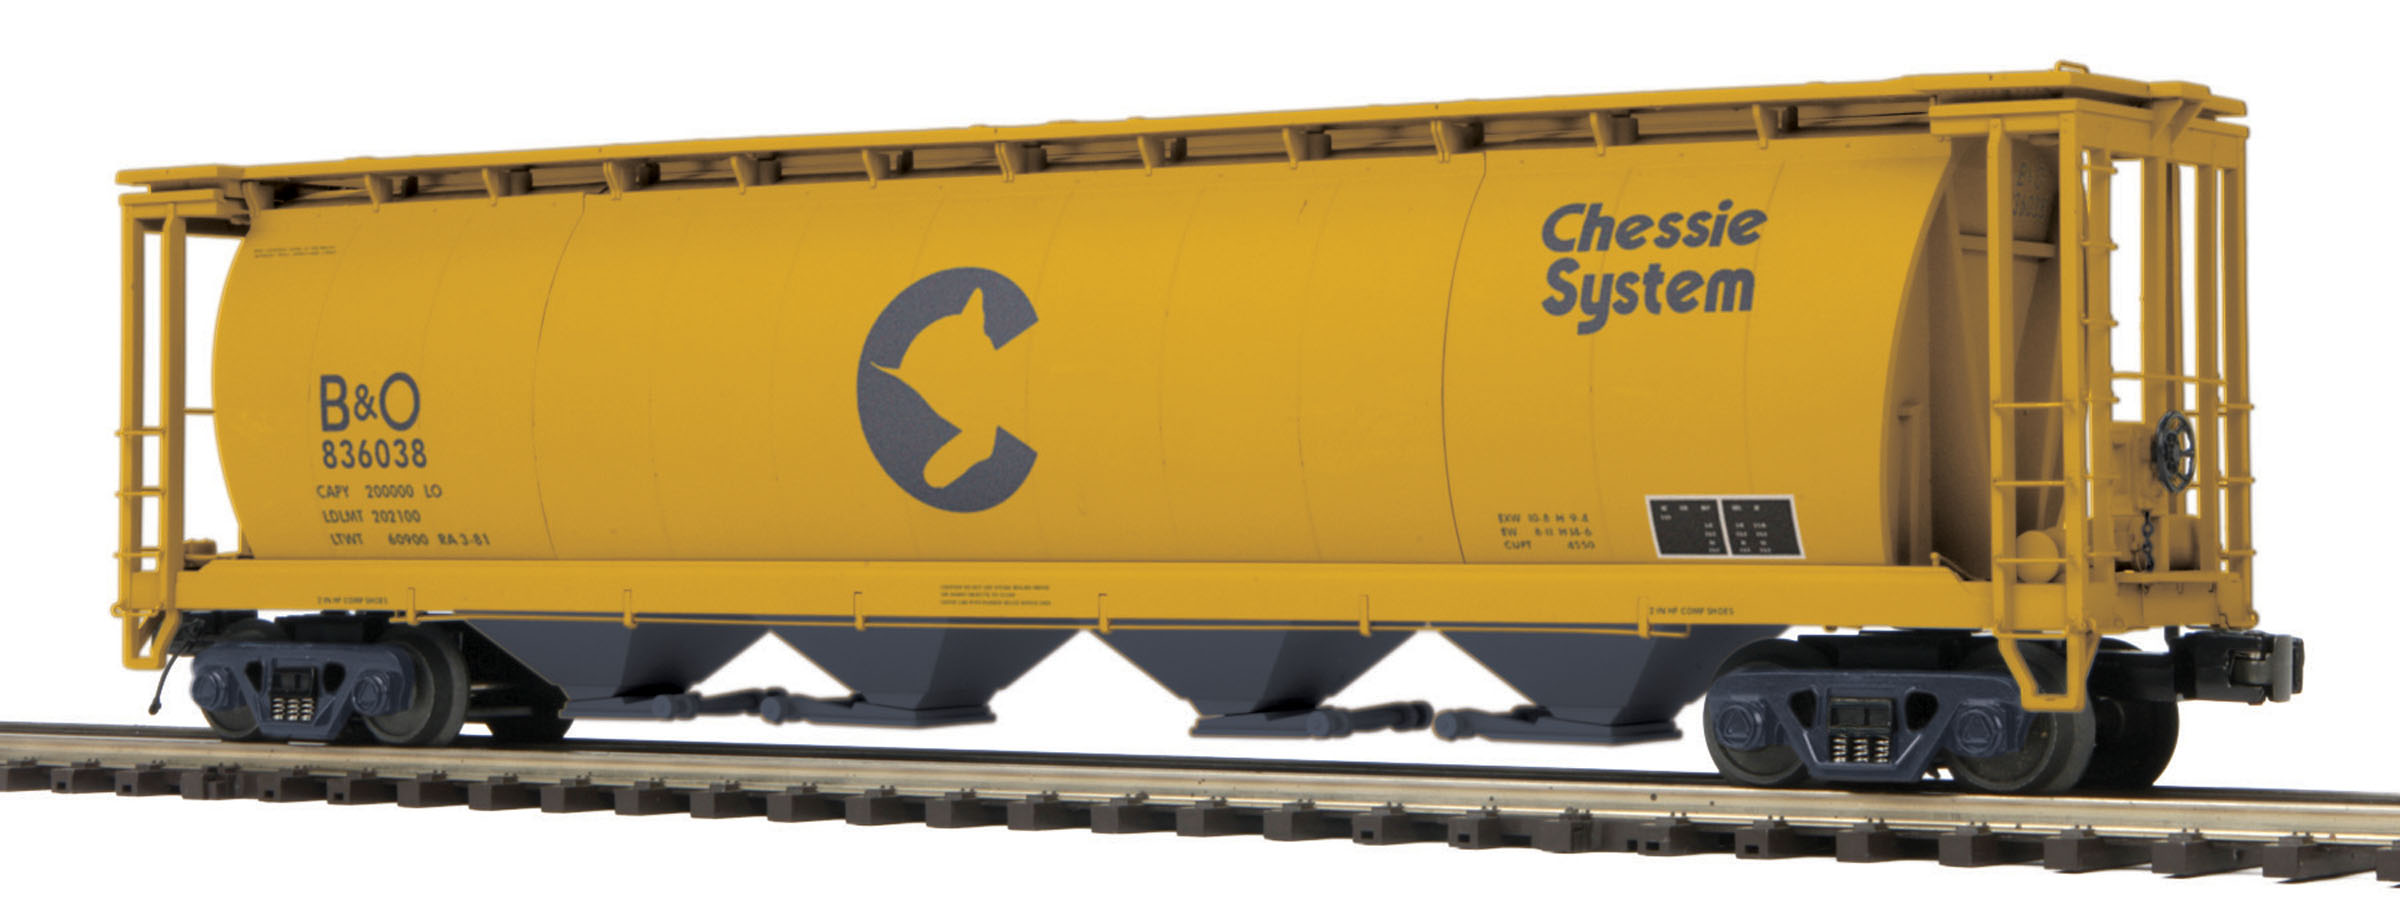 Durham industries Chessle System Co train car